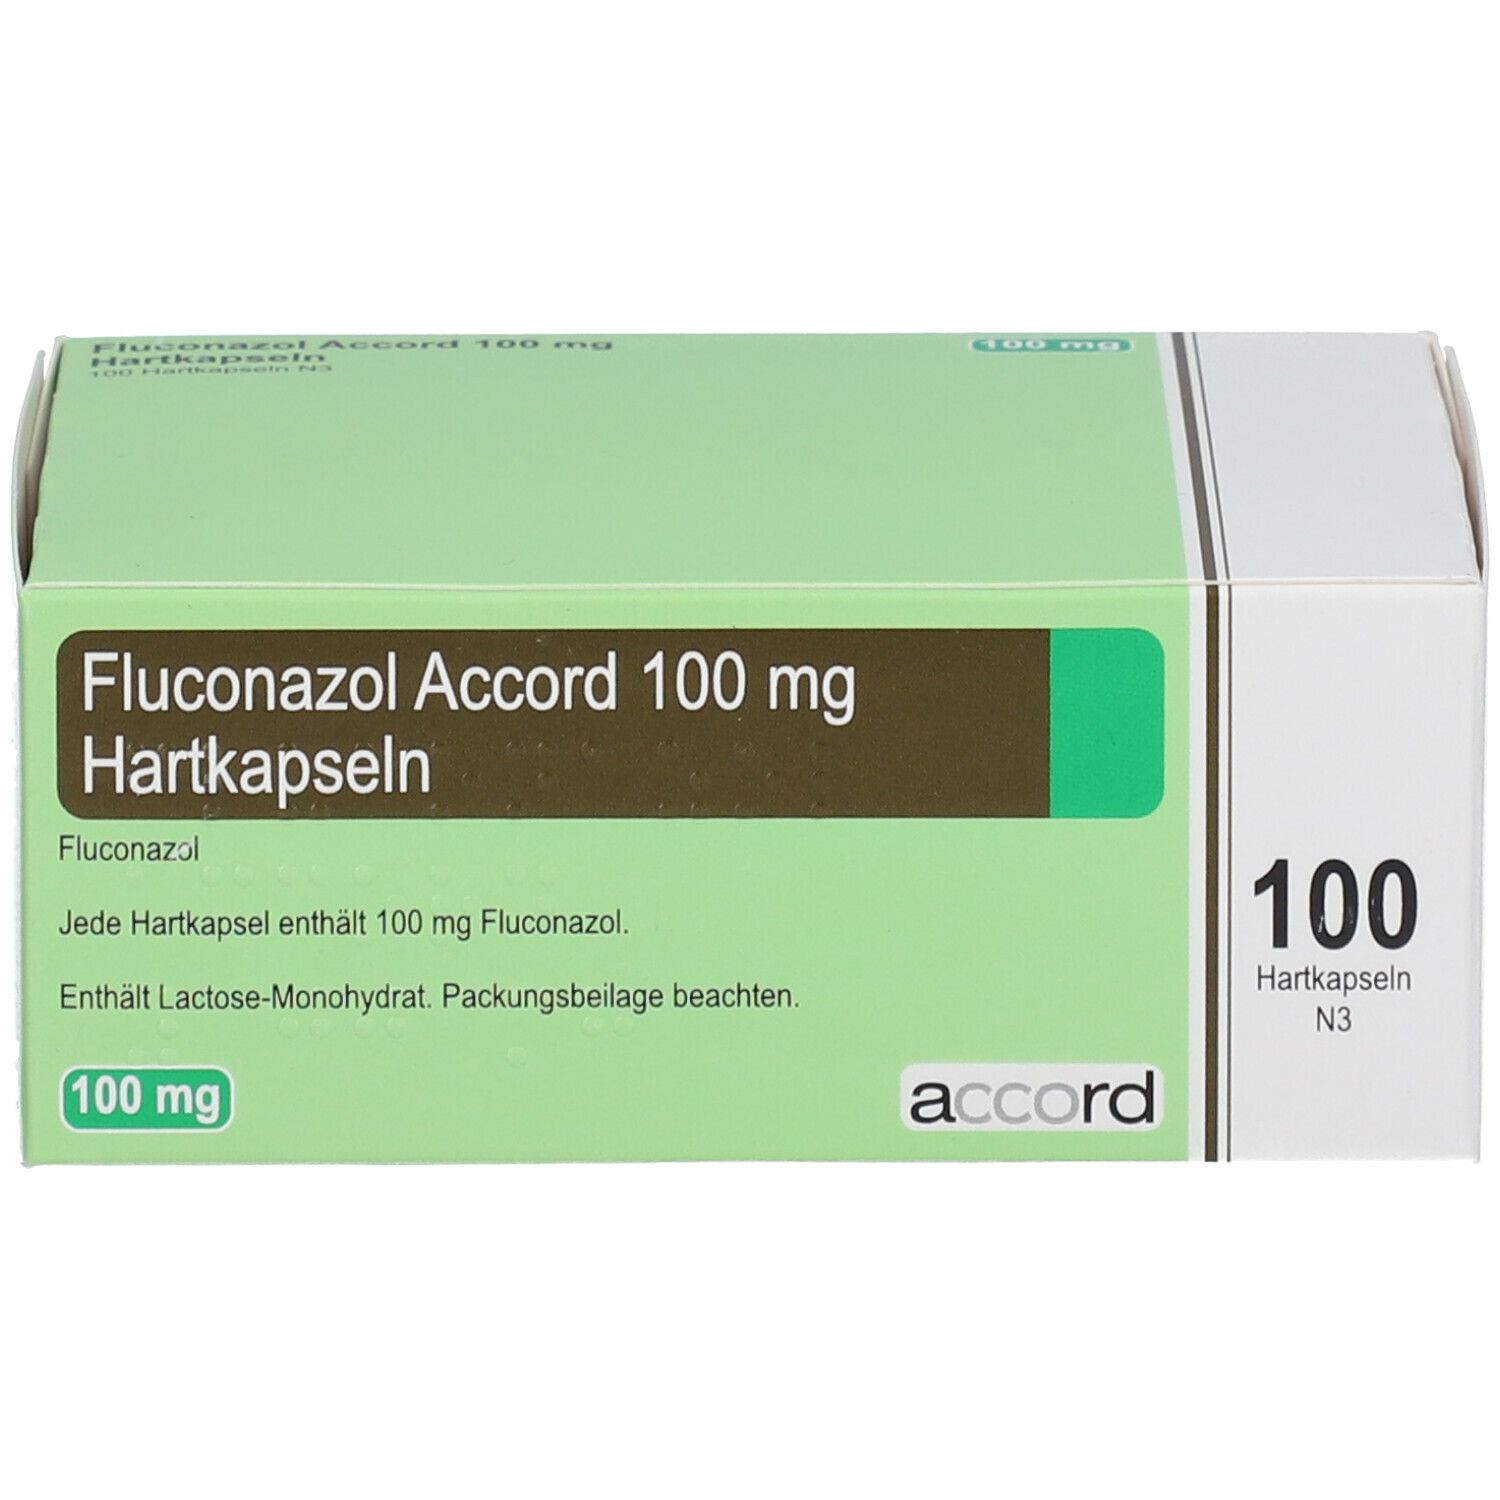 Fluconazol Accord 100 mg